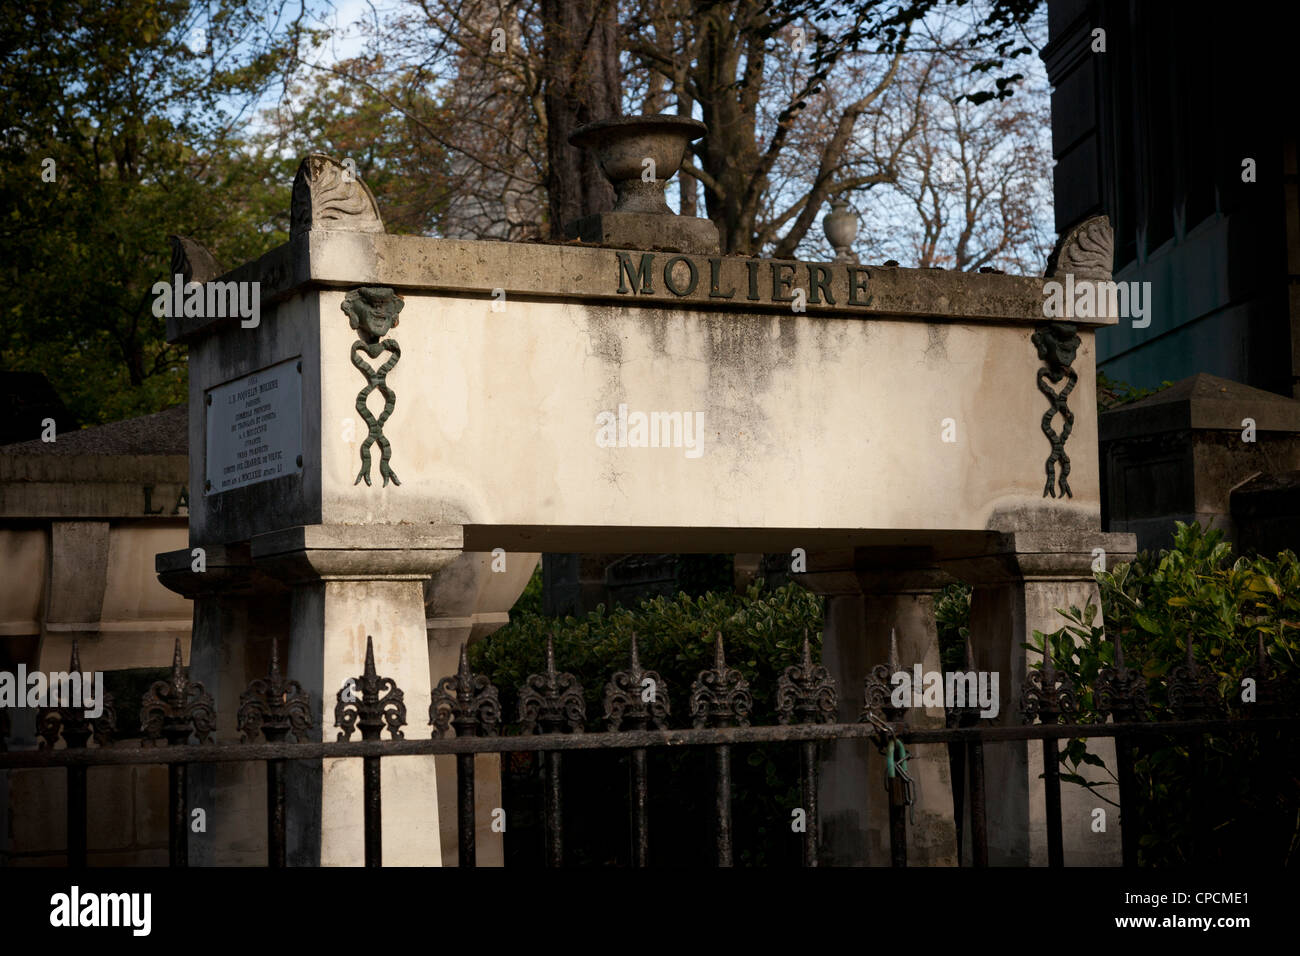 Moliere's grave in Pere Lachaise cemetery. Paris, France. Stock Photo